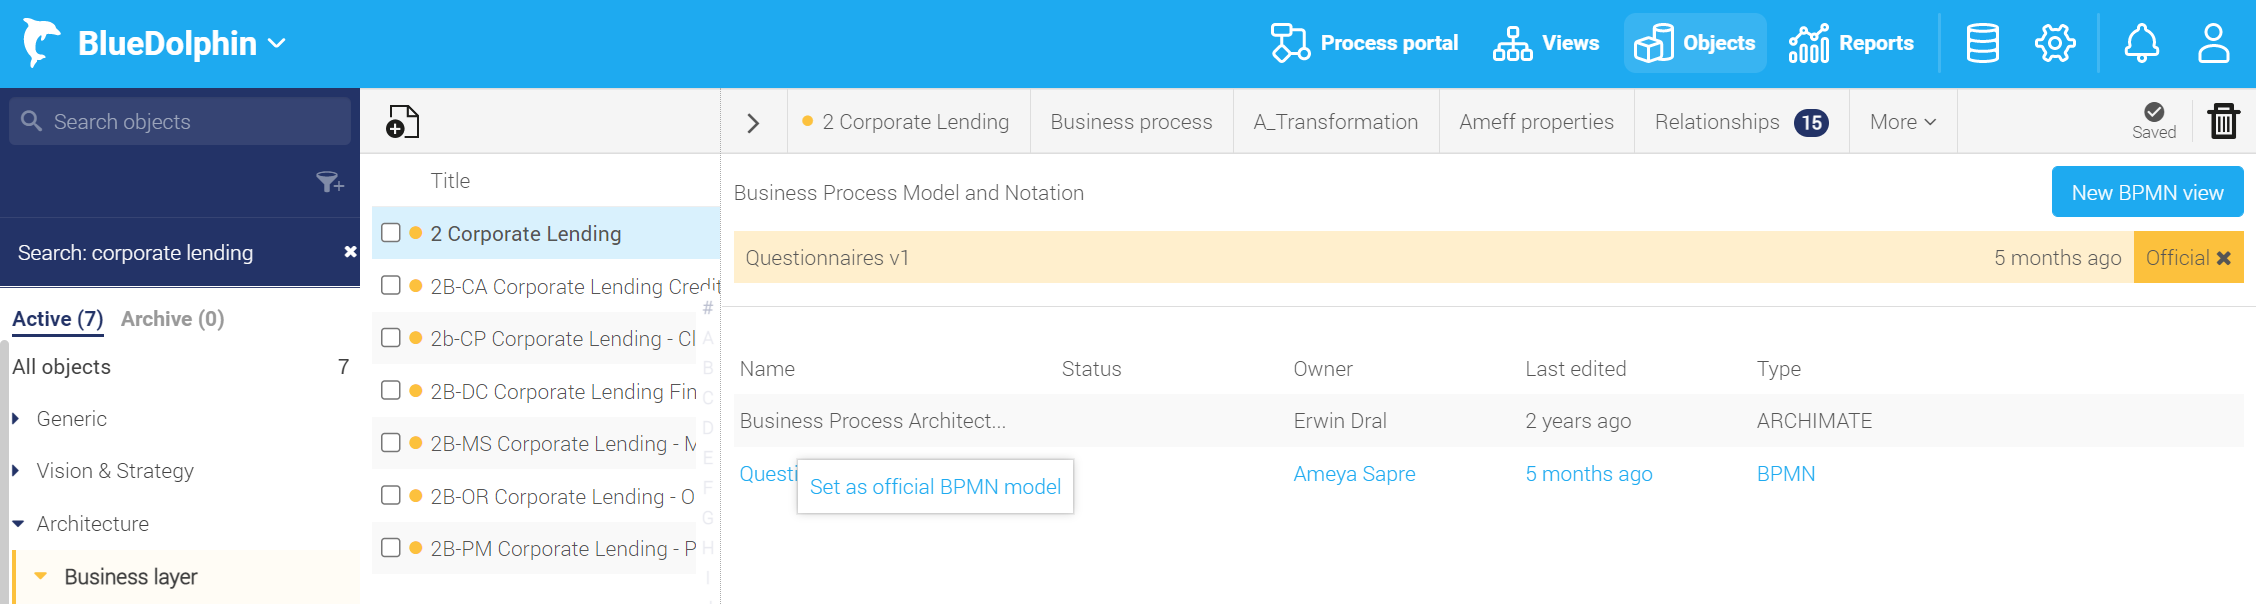 Set_as_official_BPMN_model__1_.png